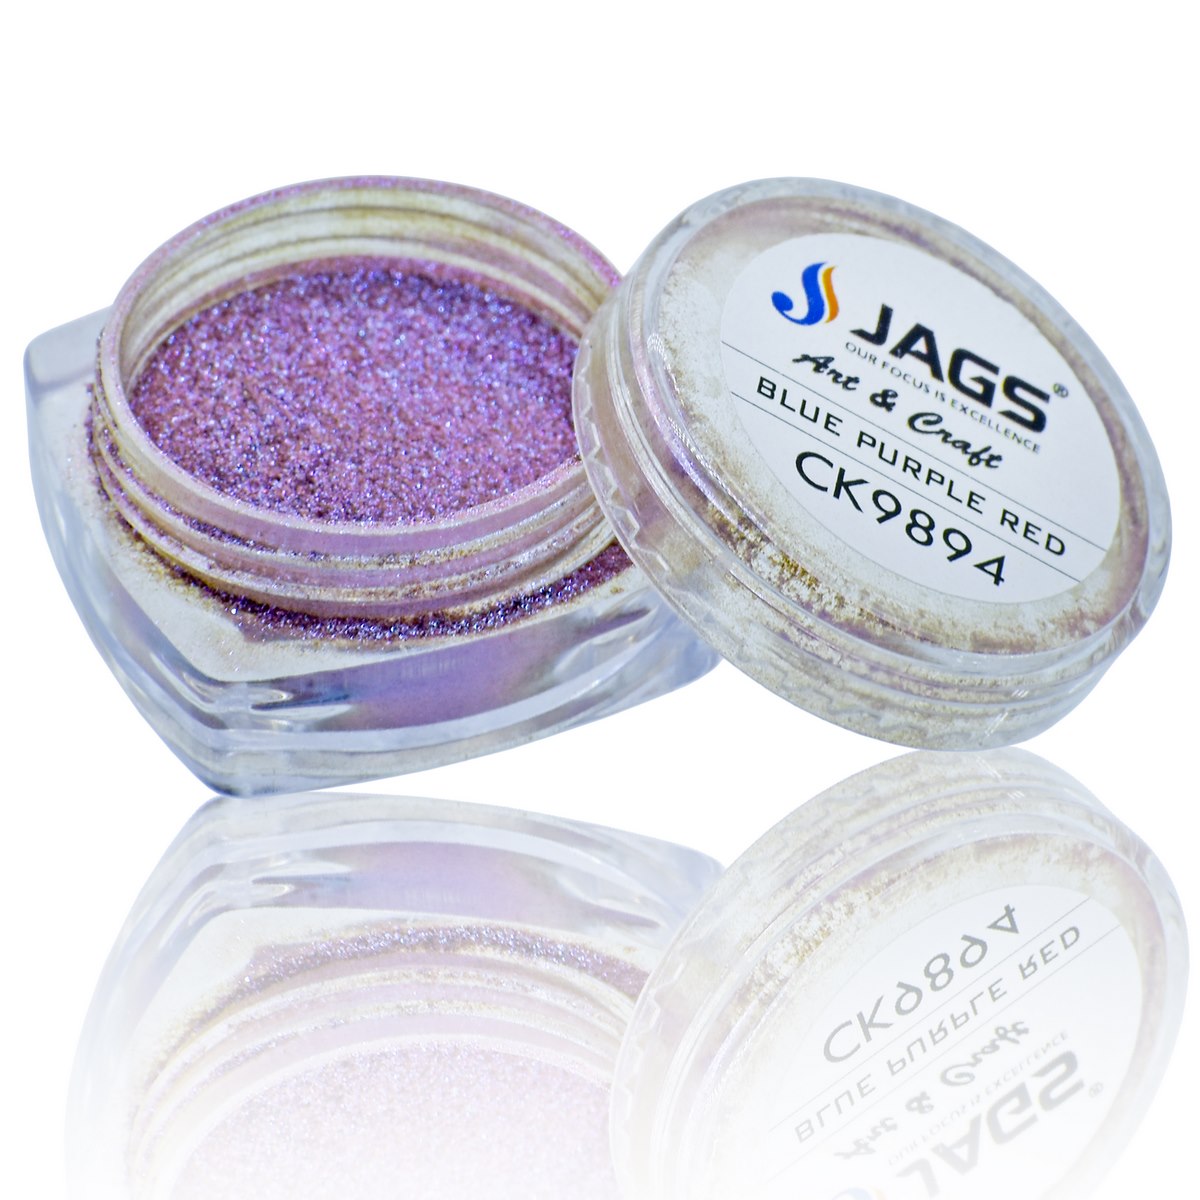 jags-mumbai Resin Pigment Enhance Your Art with Stunning Resin Chameleon Powder